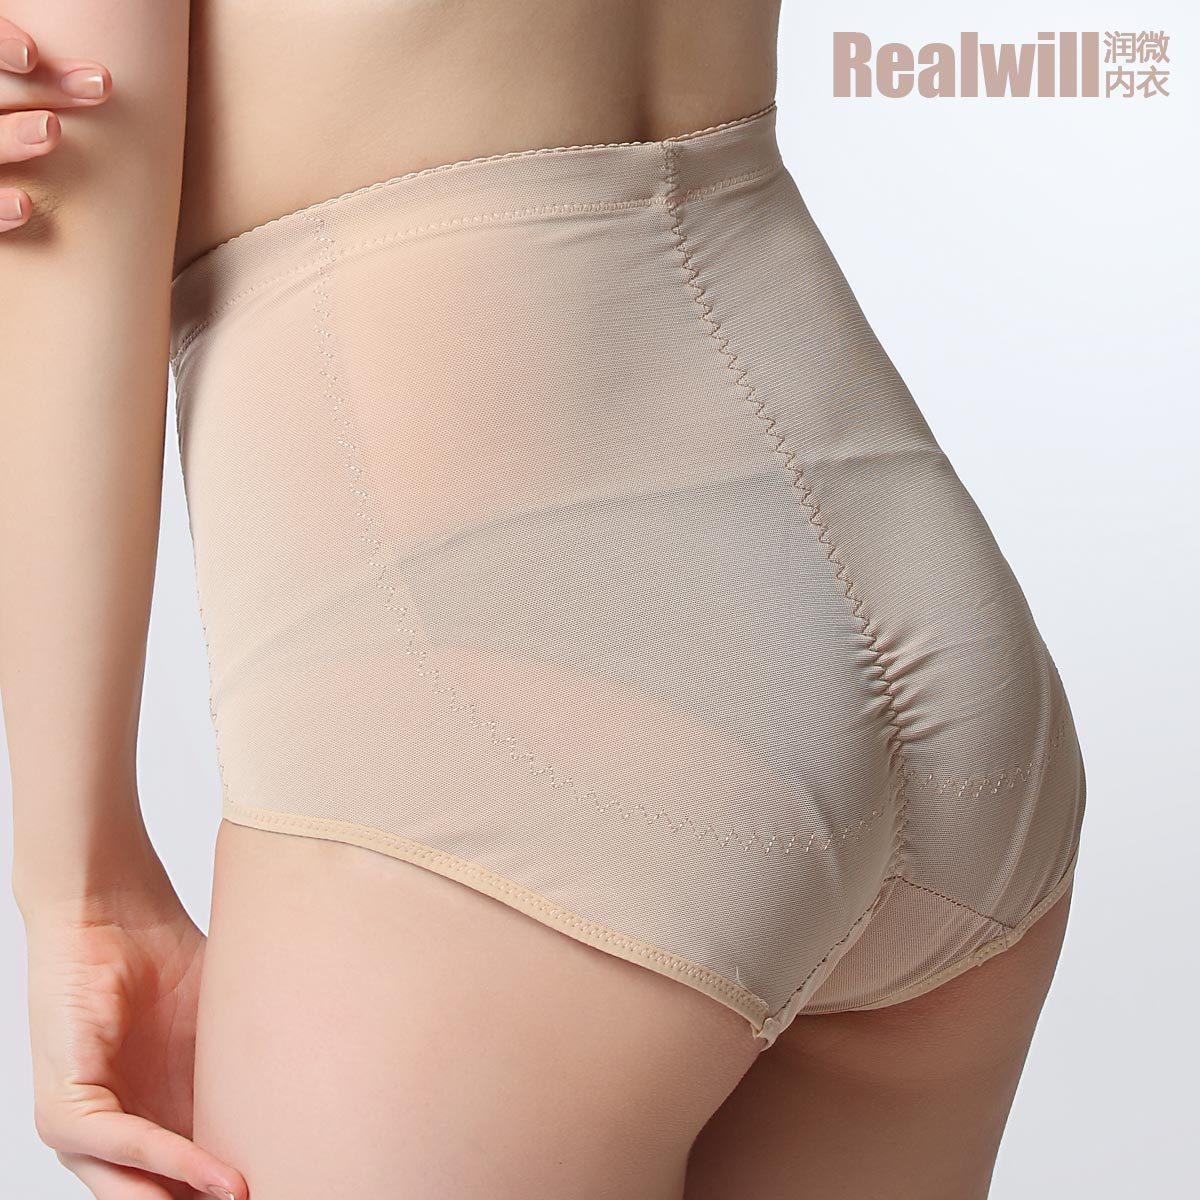 Realwill high waist abdomen drawing butt-lifting body shaping pants 8031